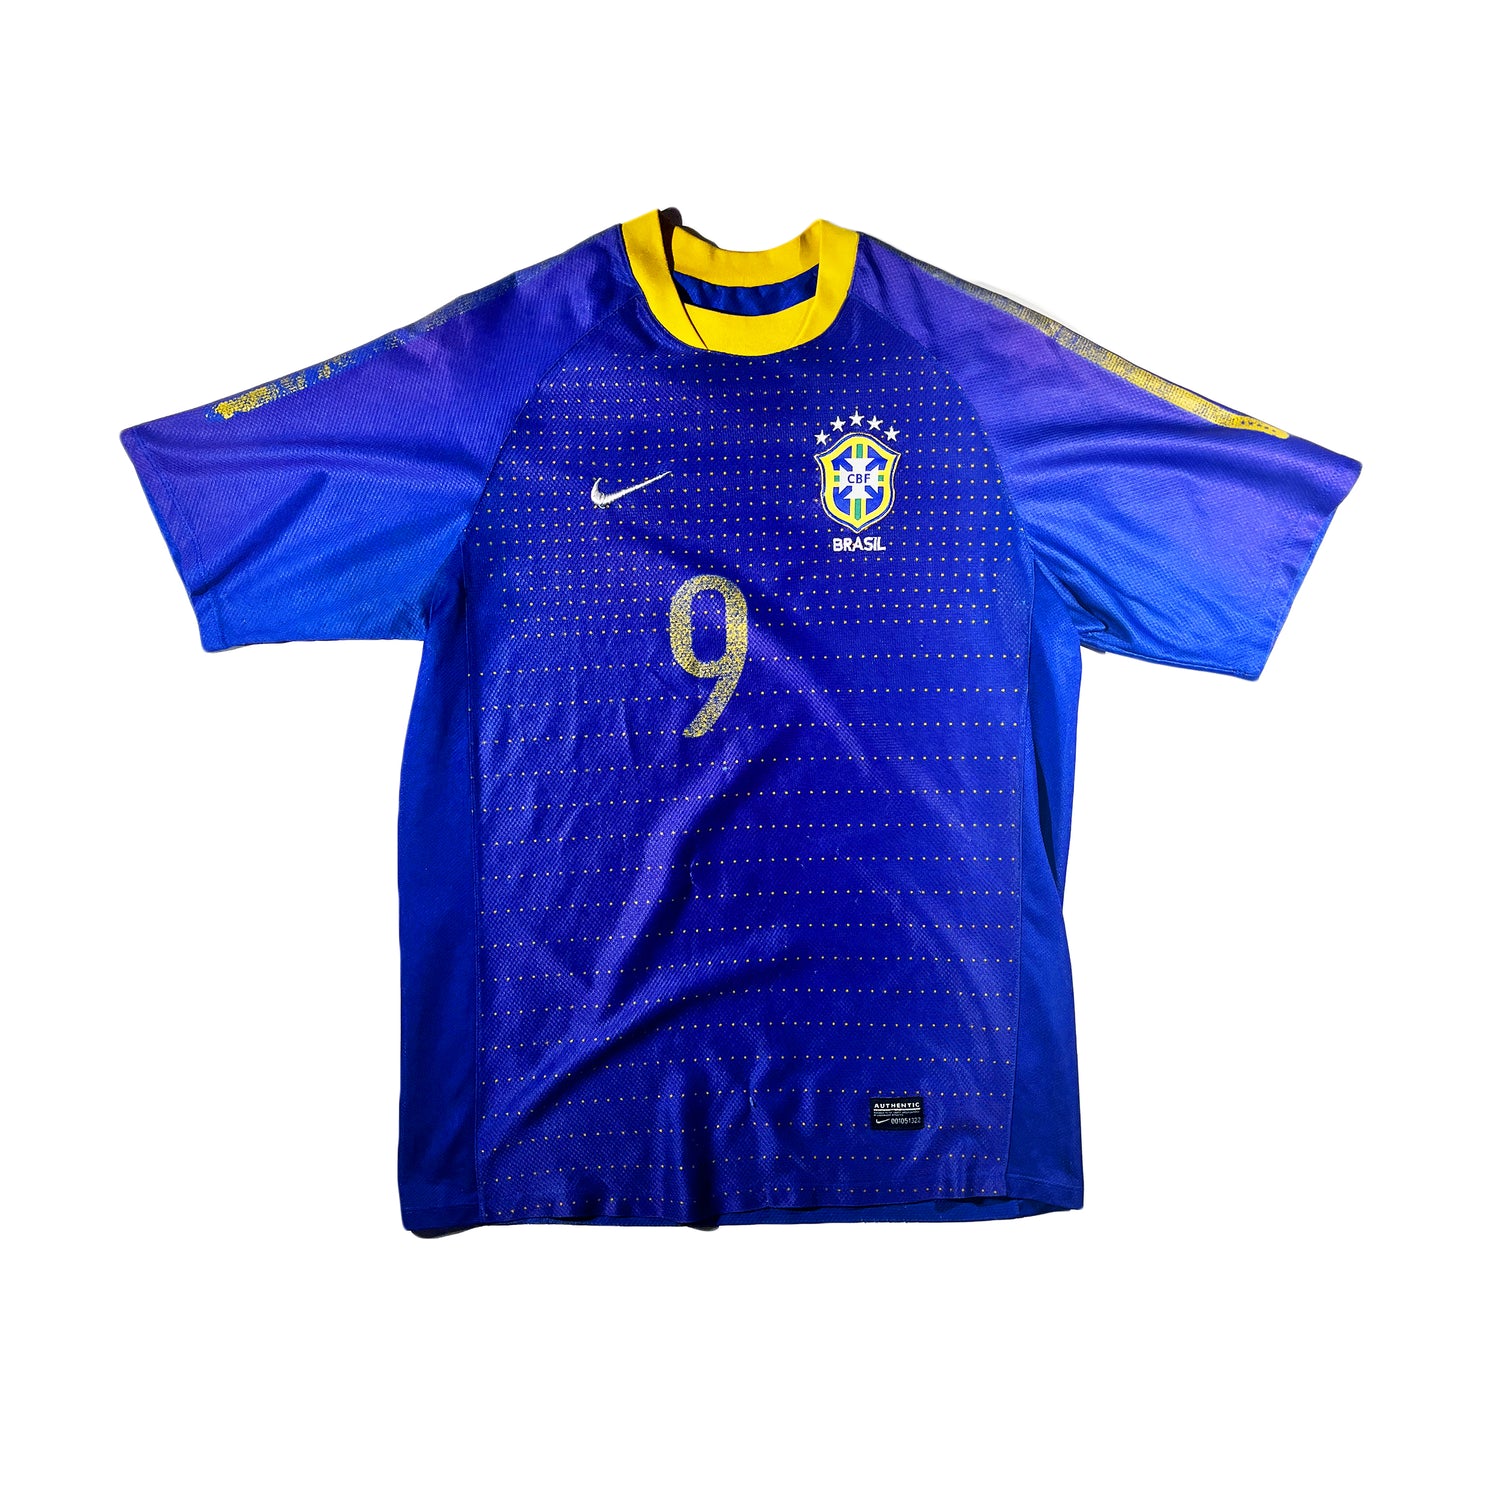 Brazil 2014 - 2015 Away football shirt jersey Nike size S